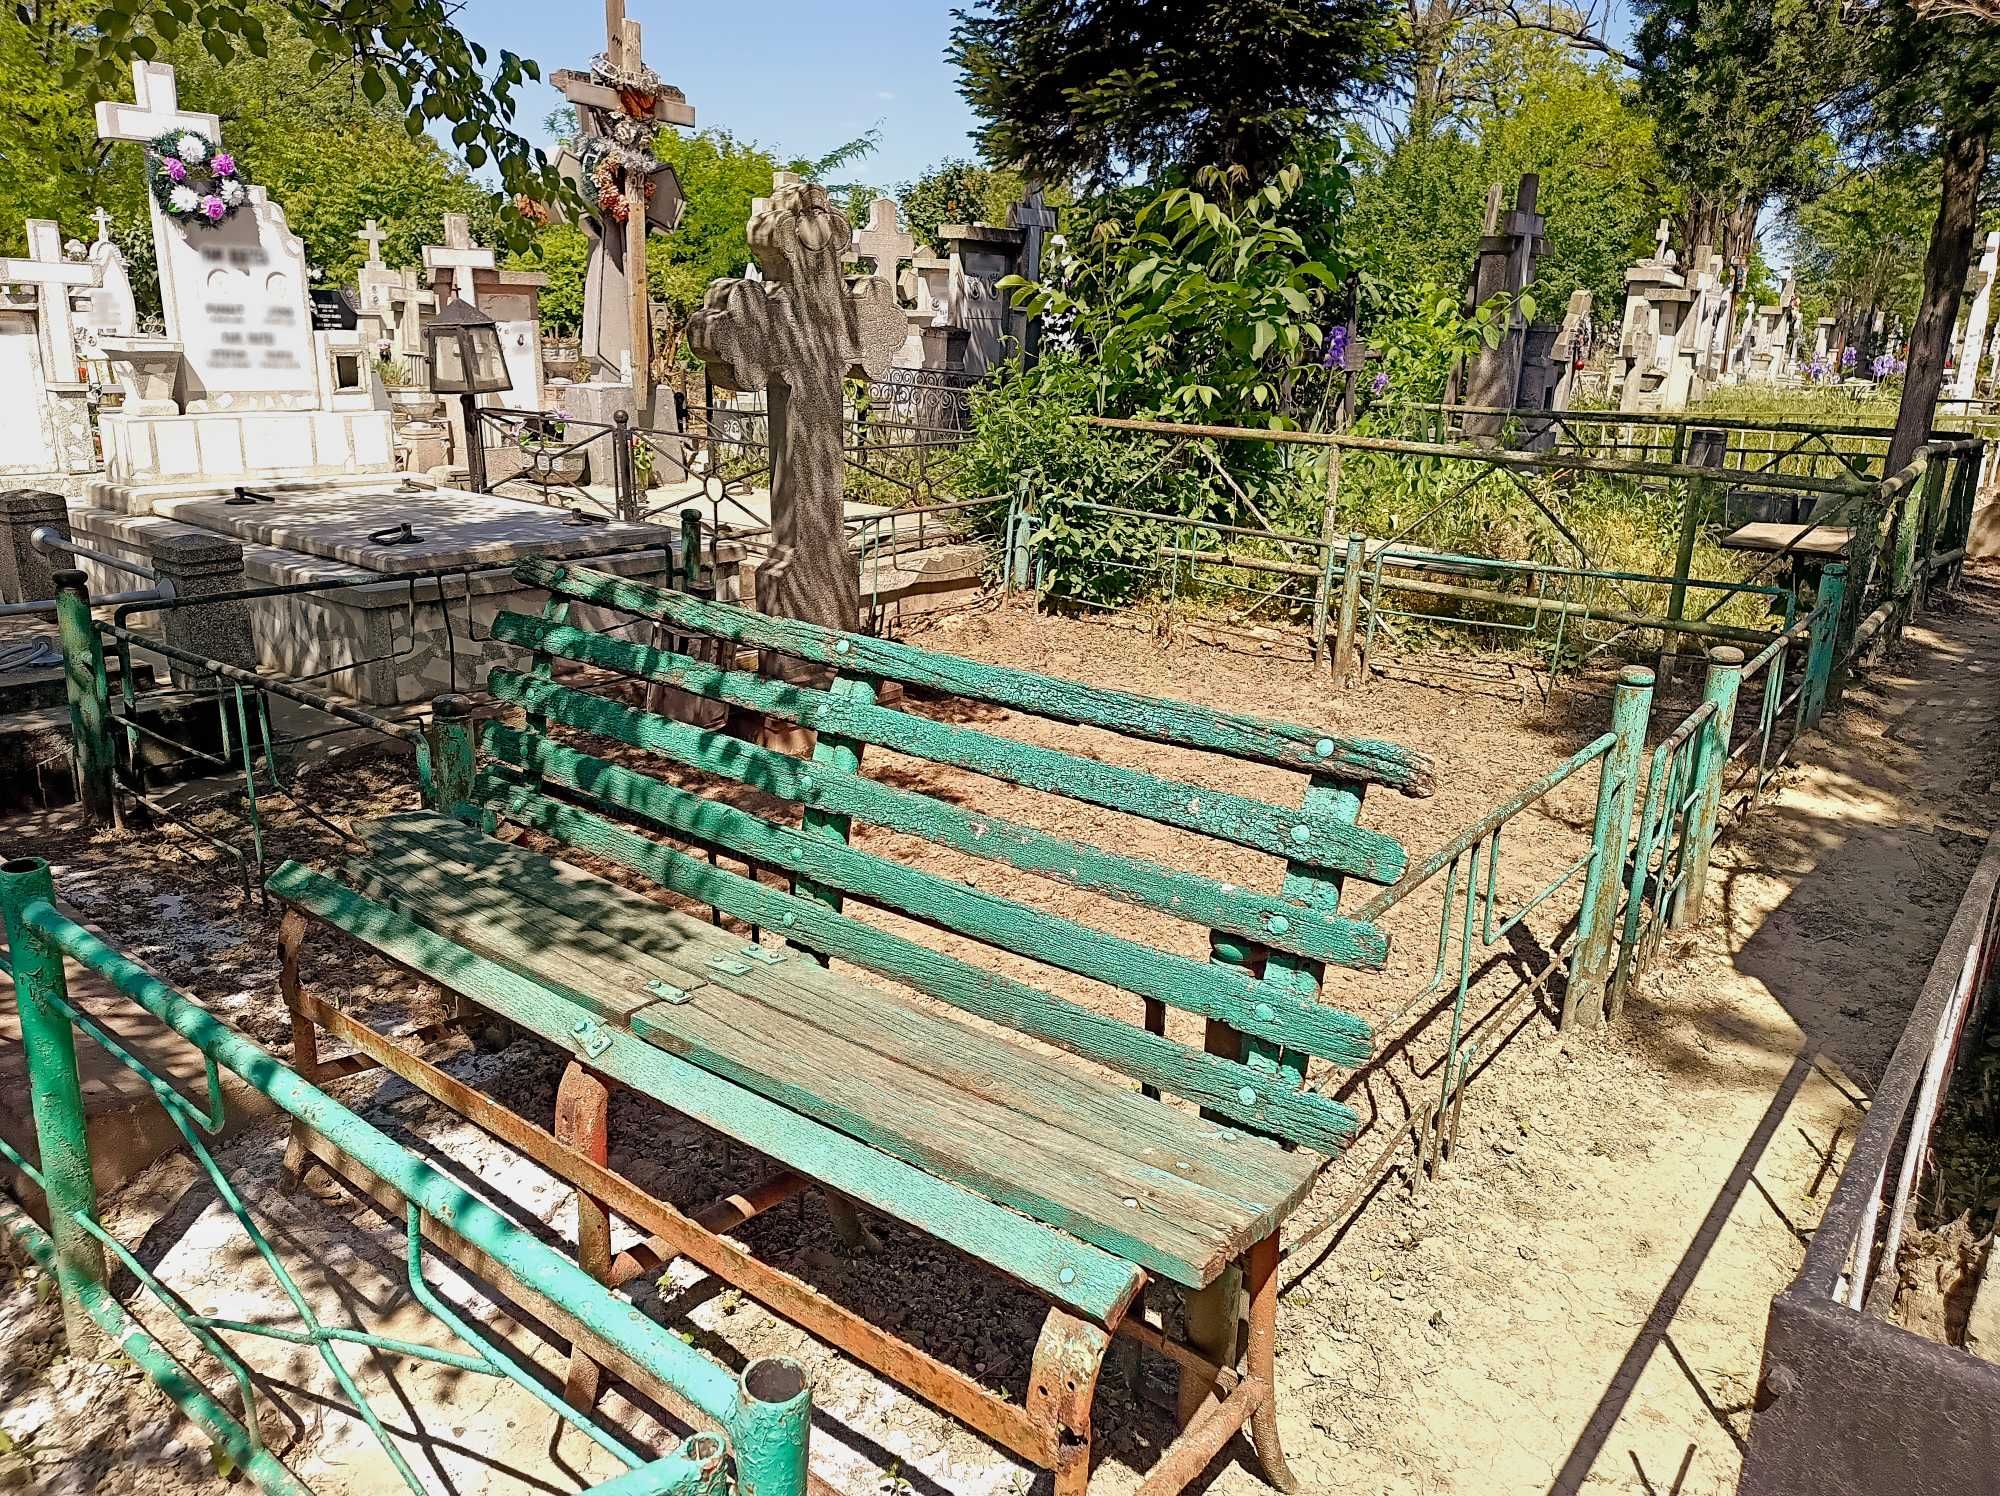 Vand loc de veci dublu in Cimitirul Eternitatea Galati, 3m x 3.6m